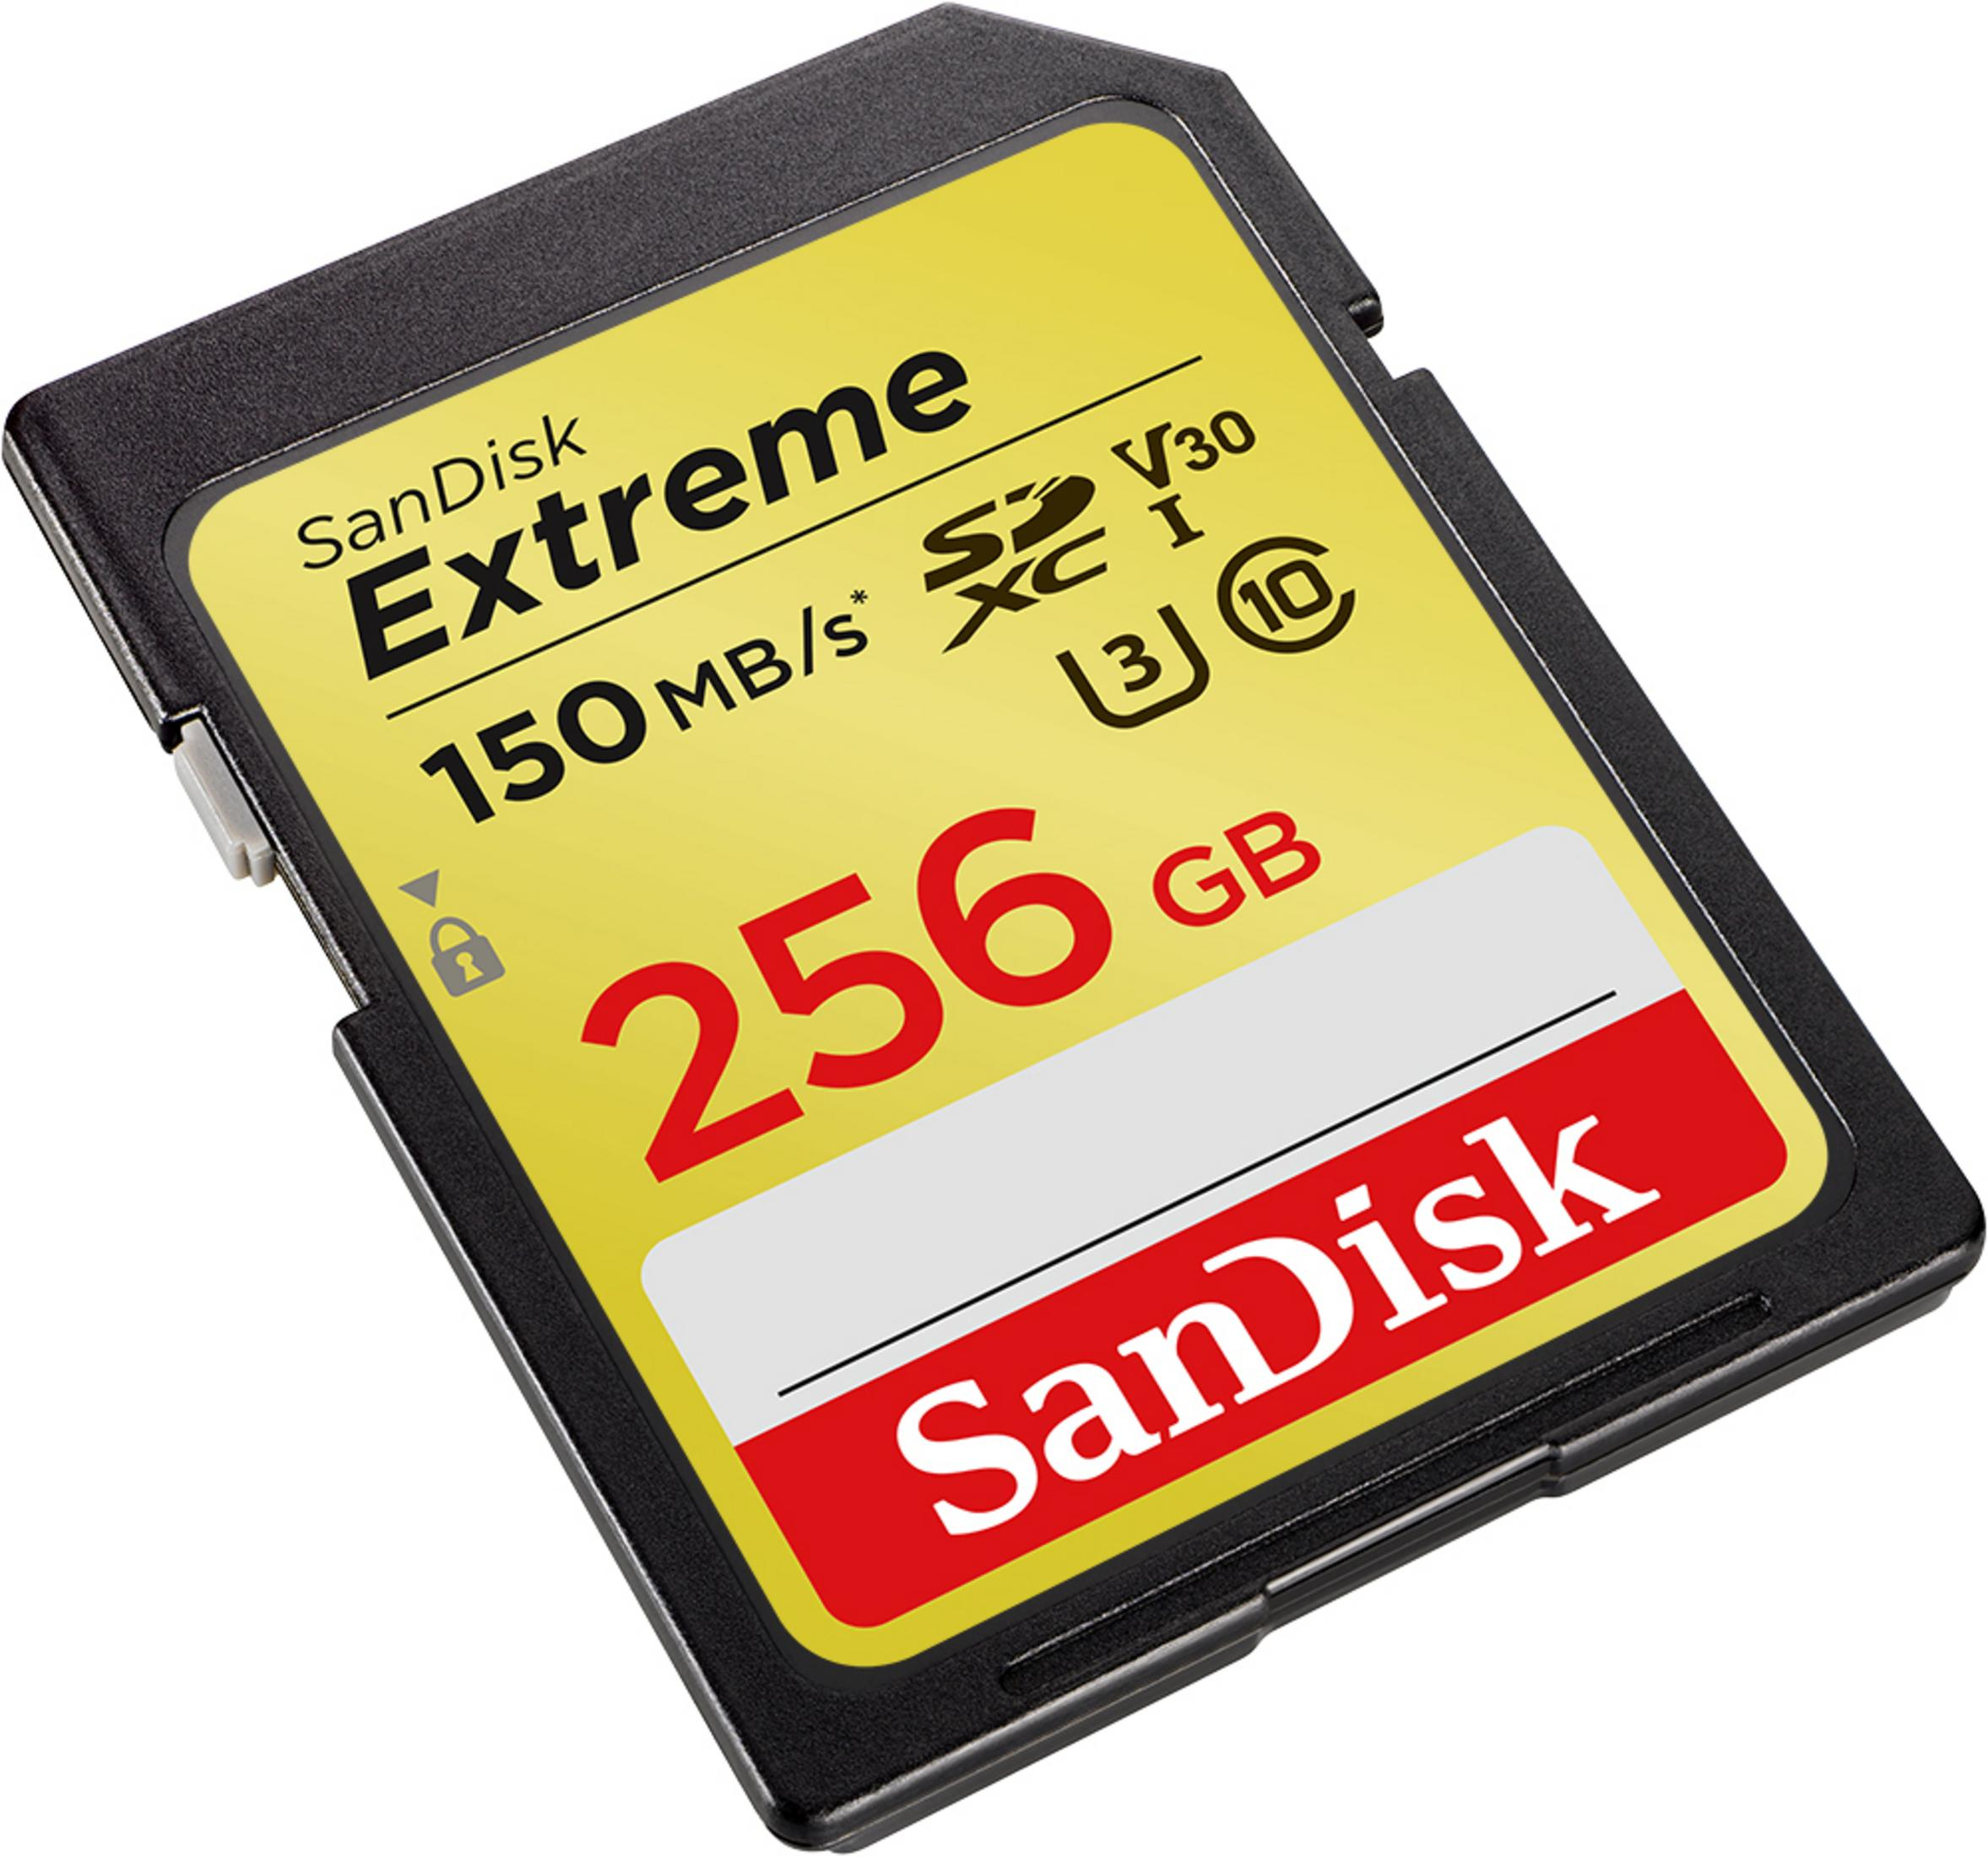 256, MB/s EXTREME GB, Micro-SDXC 150 SDXC Speicherkarte, 256 SDSDXV5-256G-GNCIN SANDISK